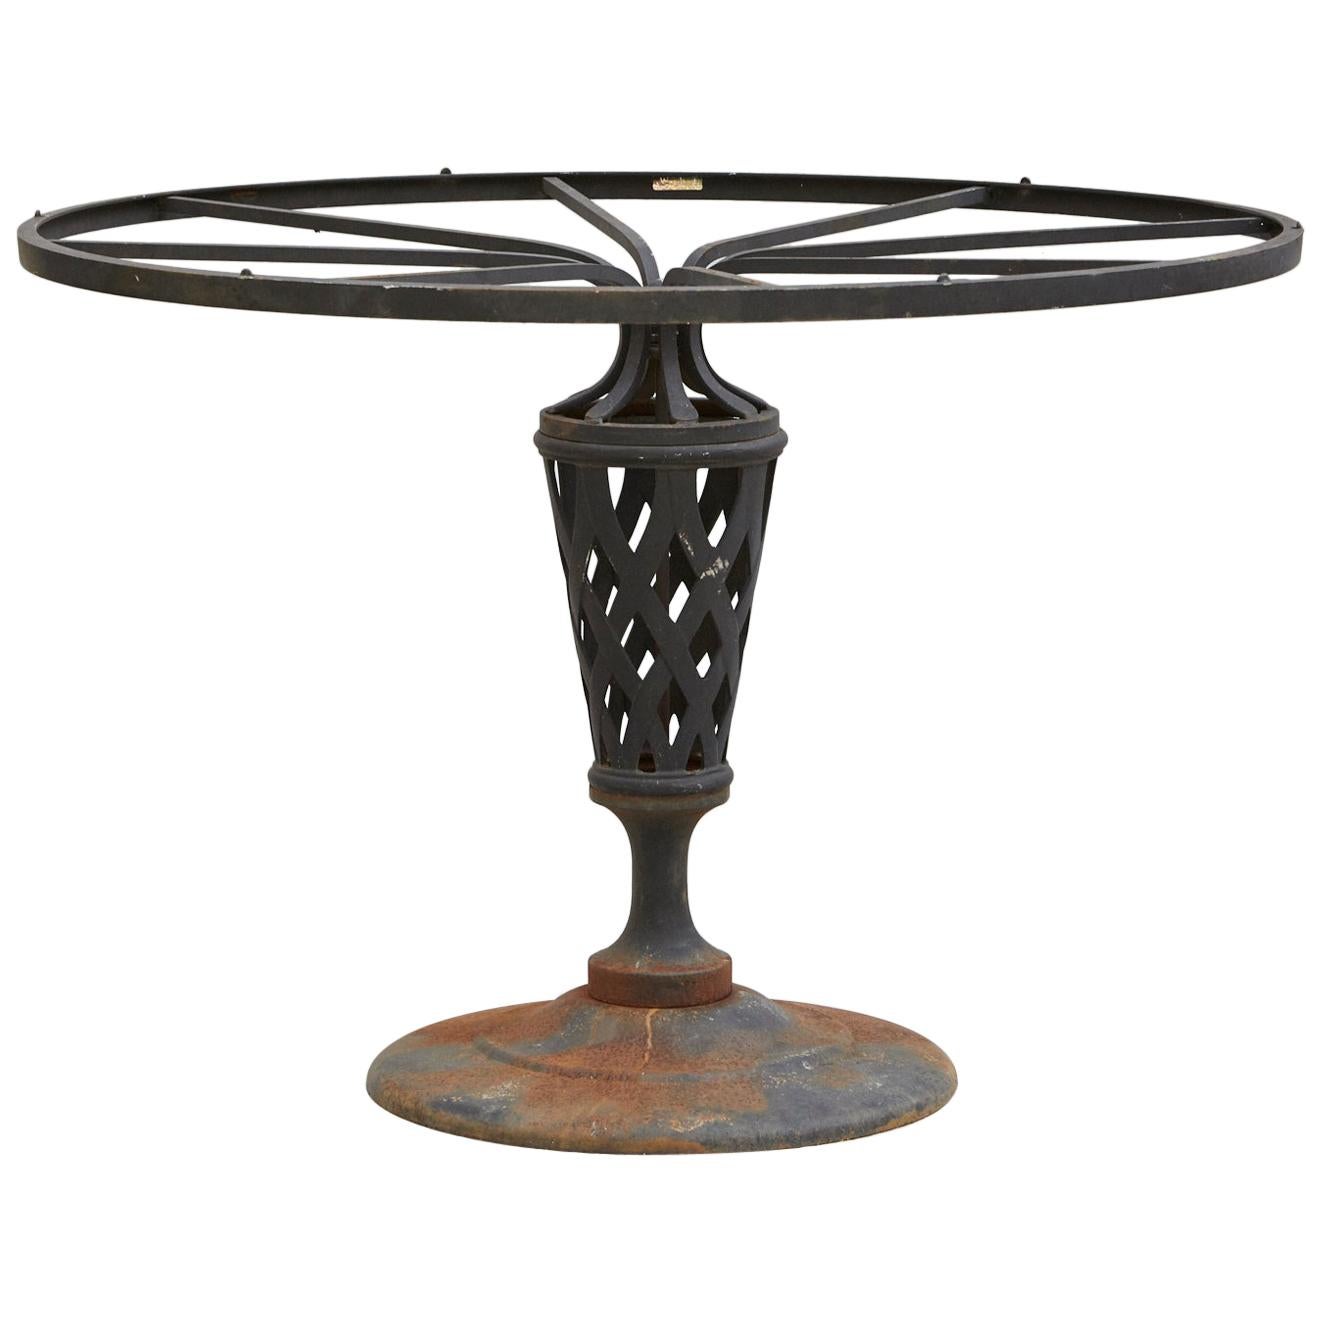 Woodard Black Iron Garden/Center Table on a Pedestal with a Lattice Pattern